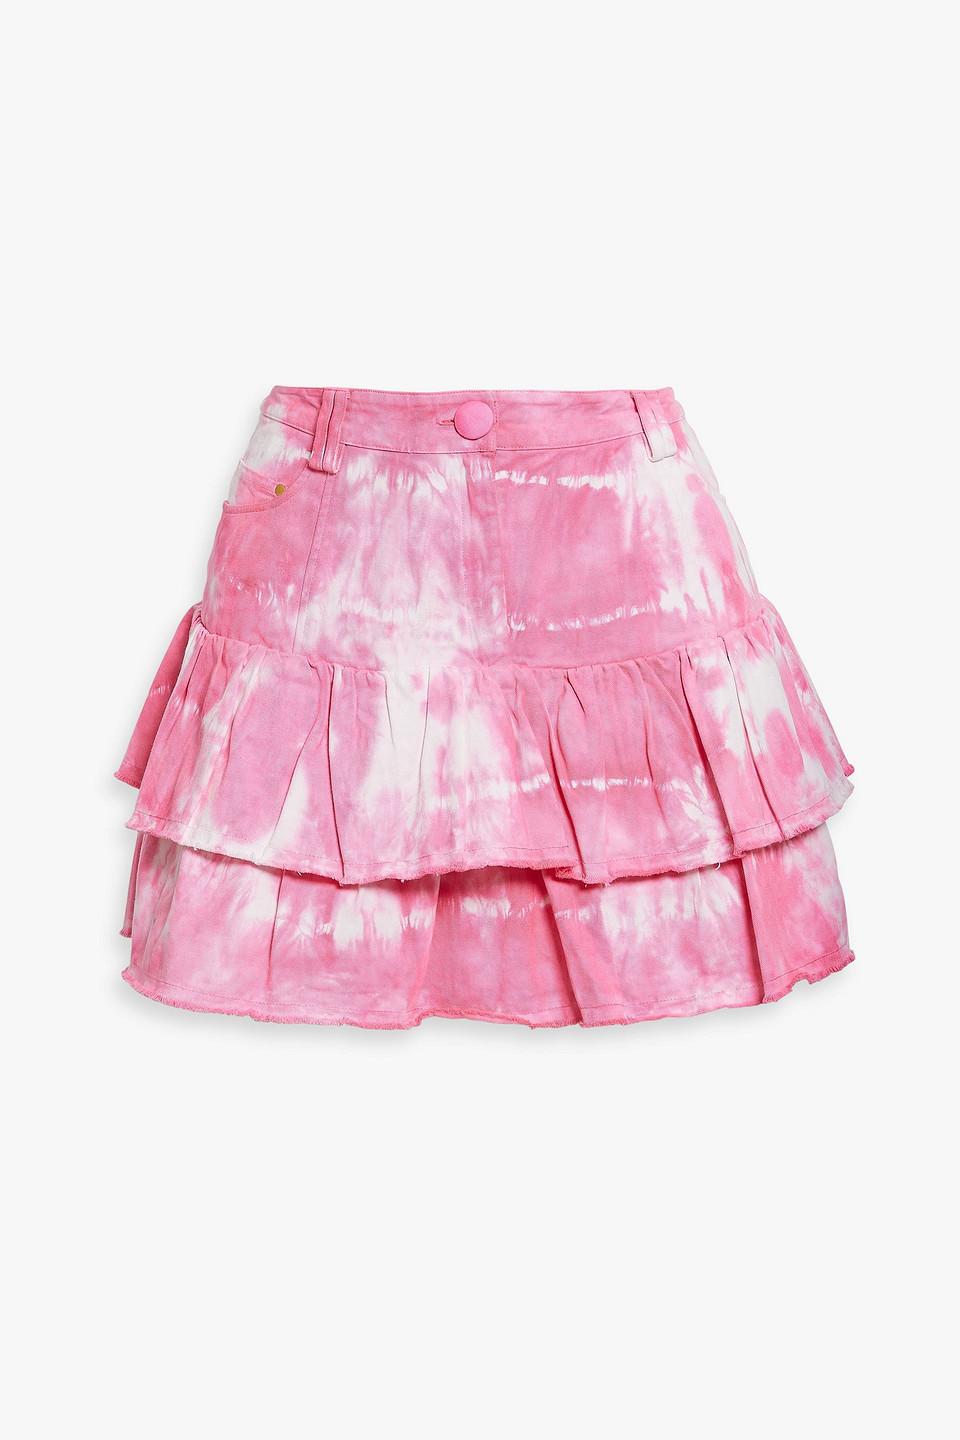 LoveShackFancy Landen Tiered Ruffled Tie-dyed Mini Skirt in Pink | Lyst